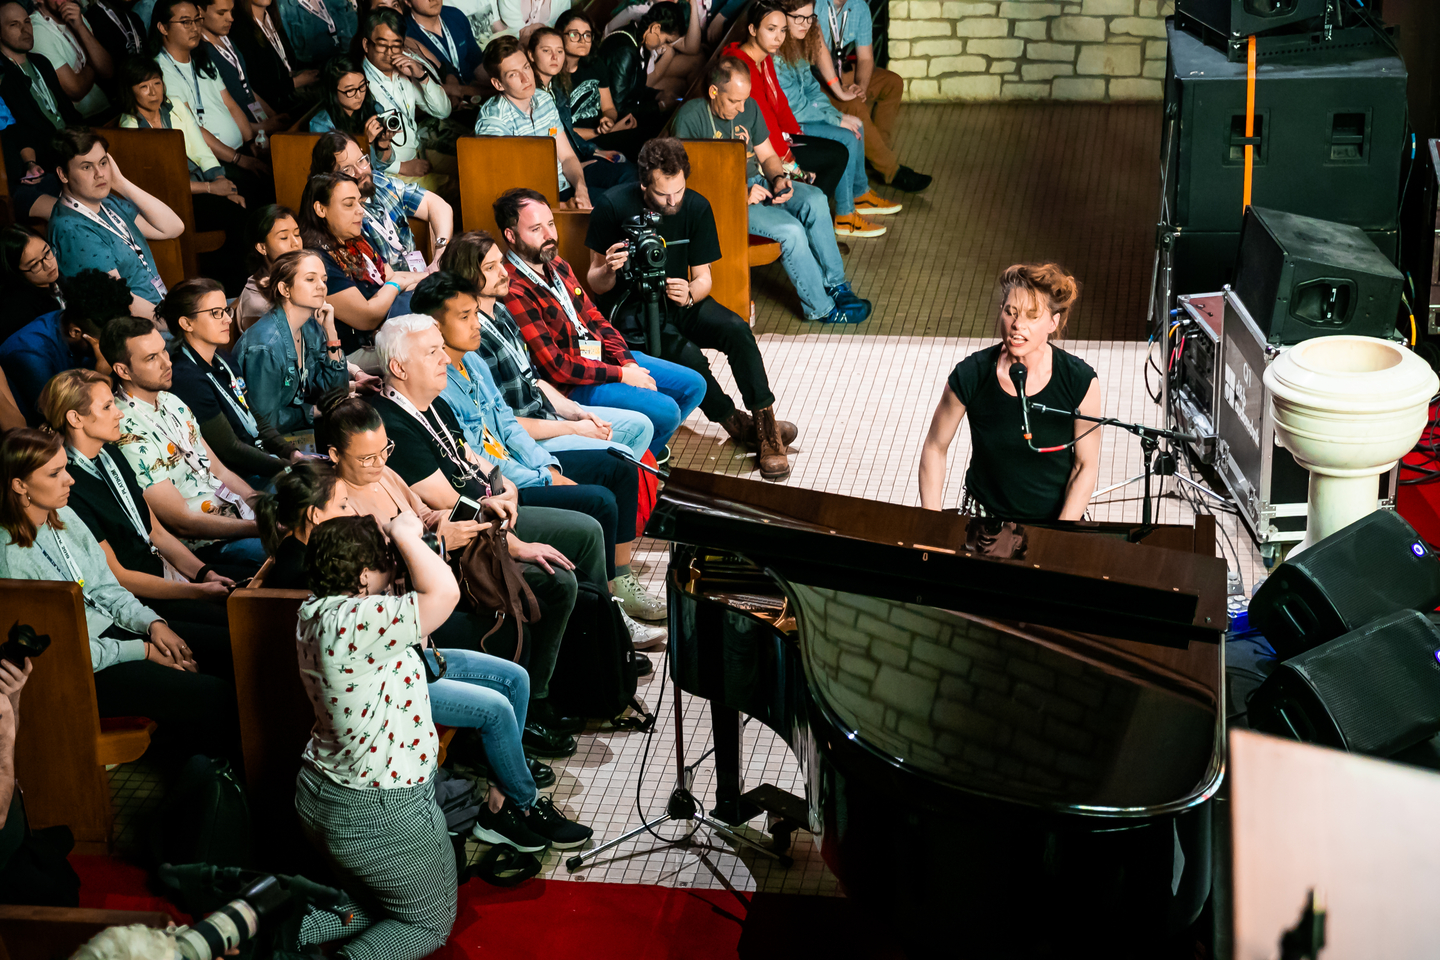 Amanda Palmer performs onstage at NPR Tiny Desk Concert at Central Presbyterian Church.